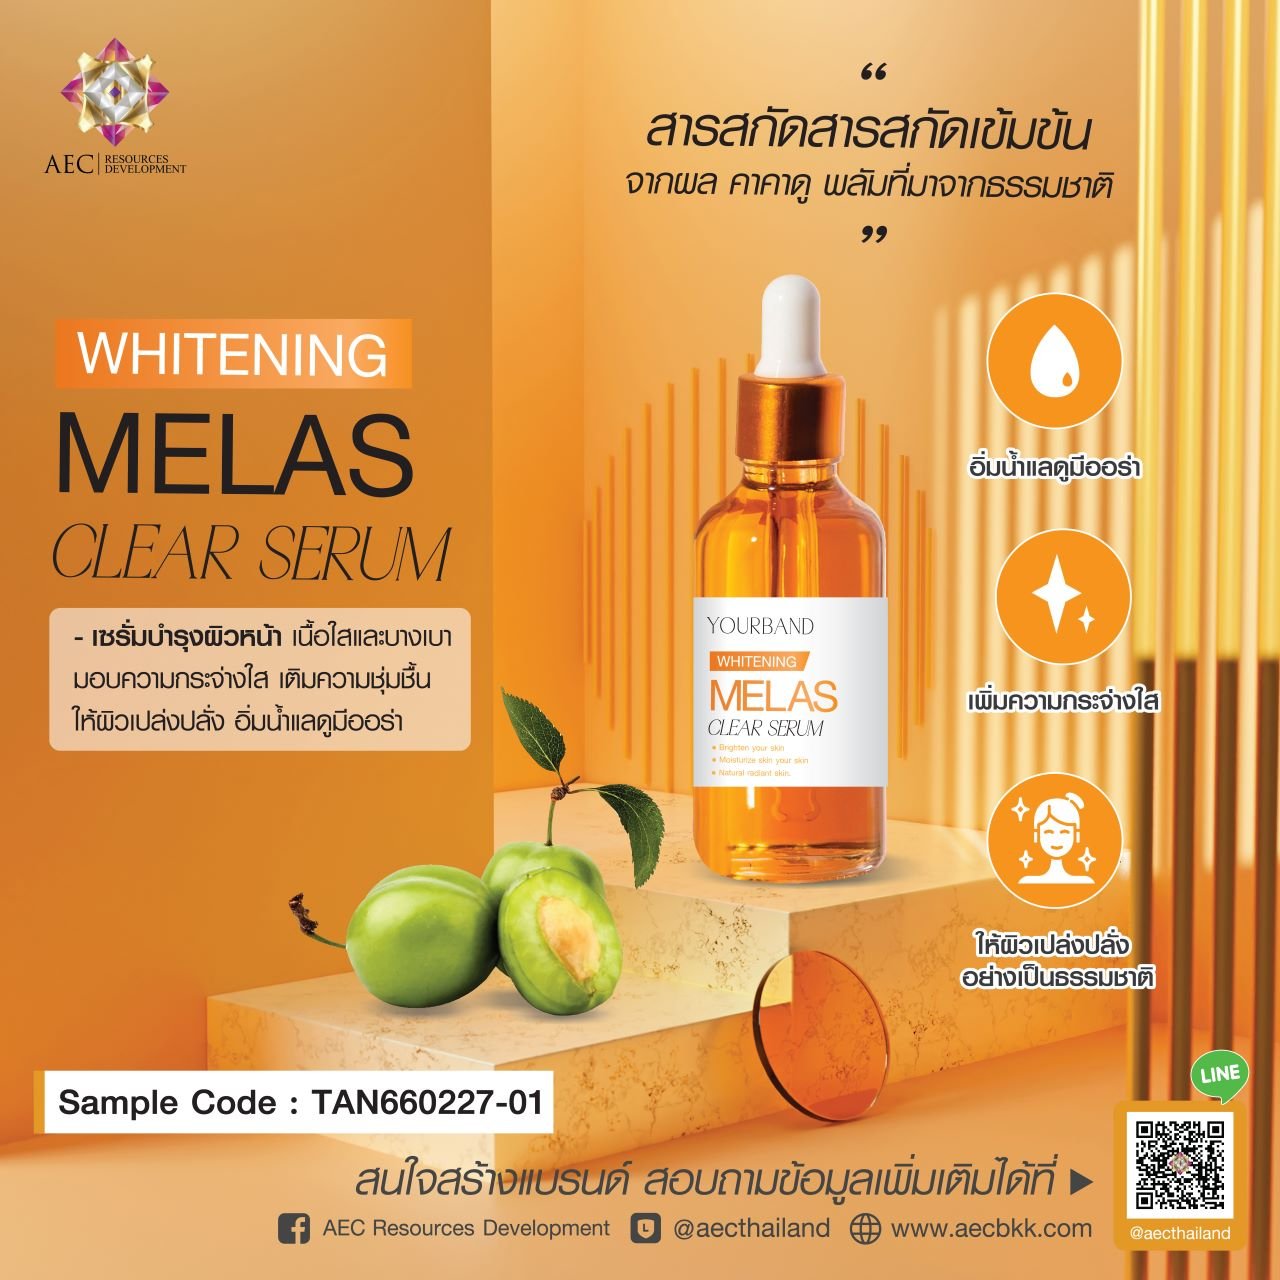 Whitening Melas Clear Serum